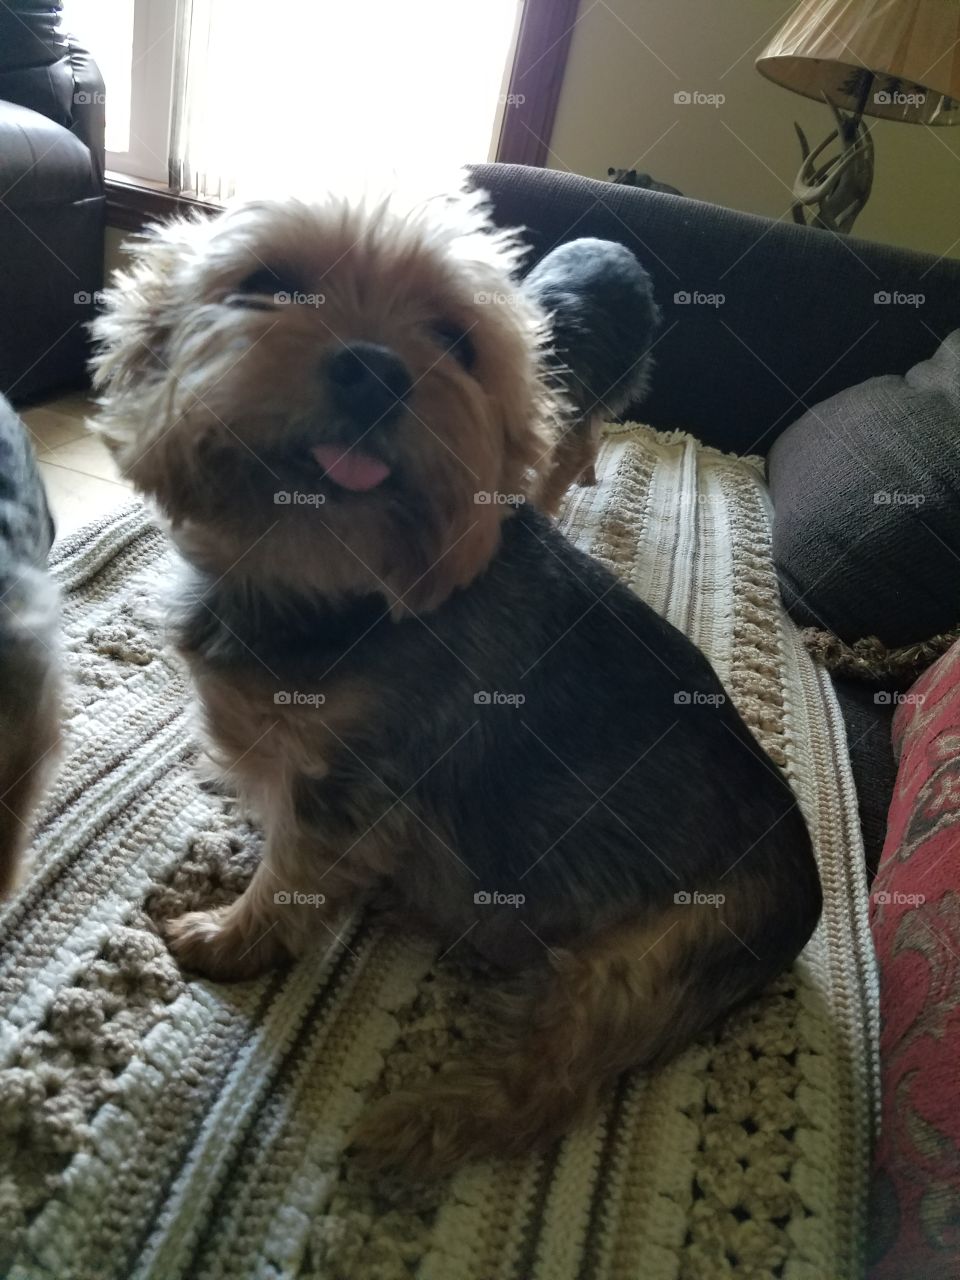 showing his tongue